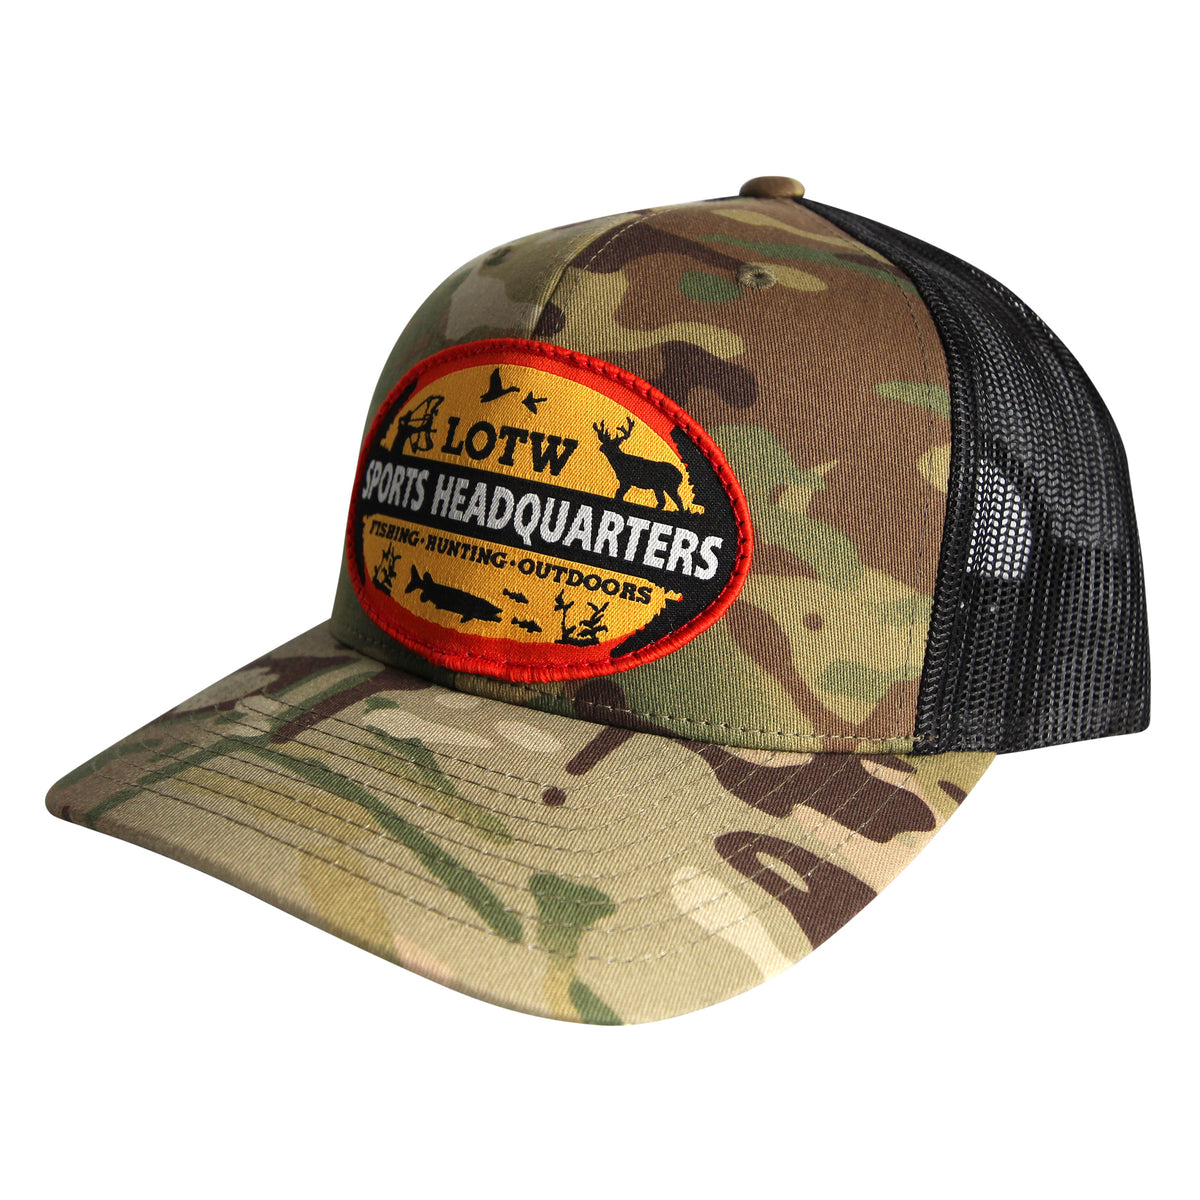 LOTW Sports Headquarters Classic Multicam Snapback Trucker Hats - Multicam